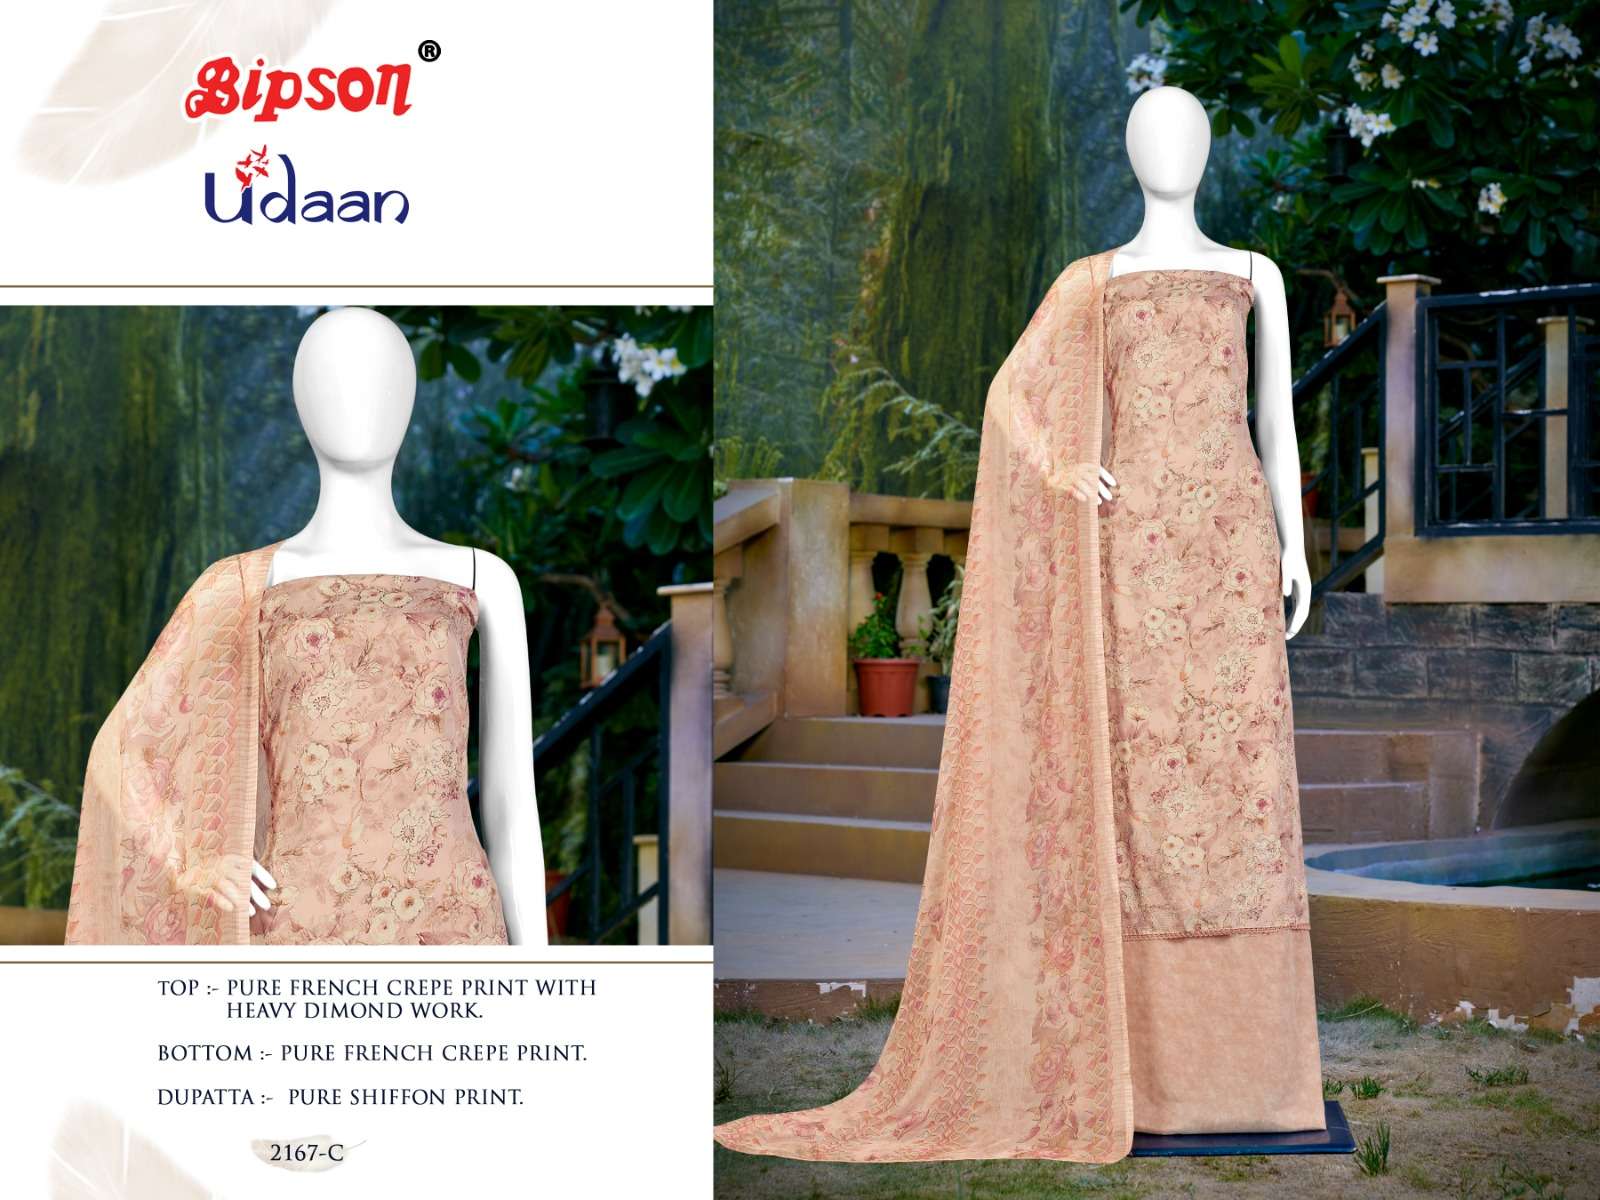 bipson prints udaan 2167 colour pakistani designer salwar kameez wholesale price surat gujarat